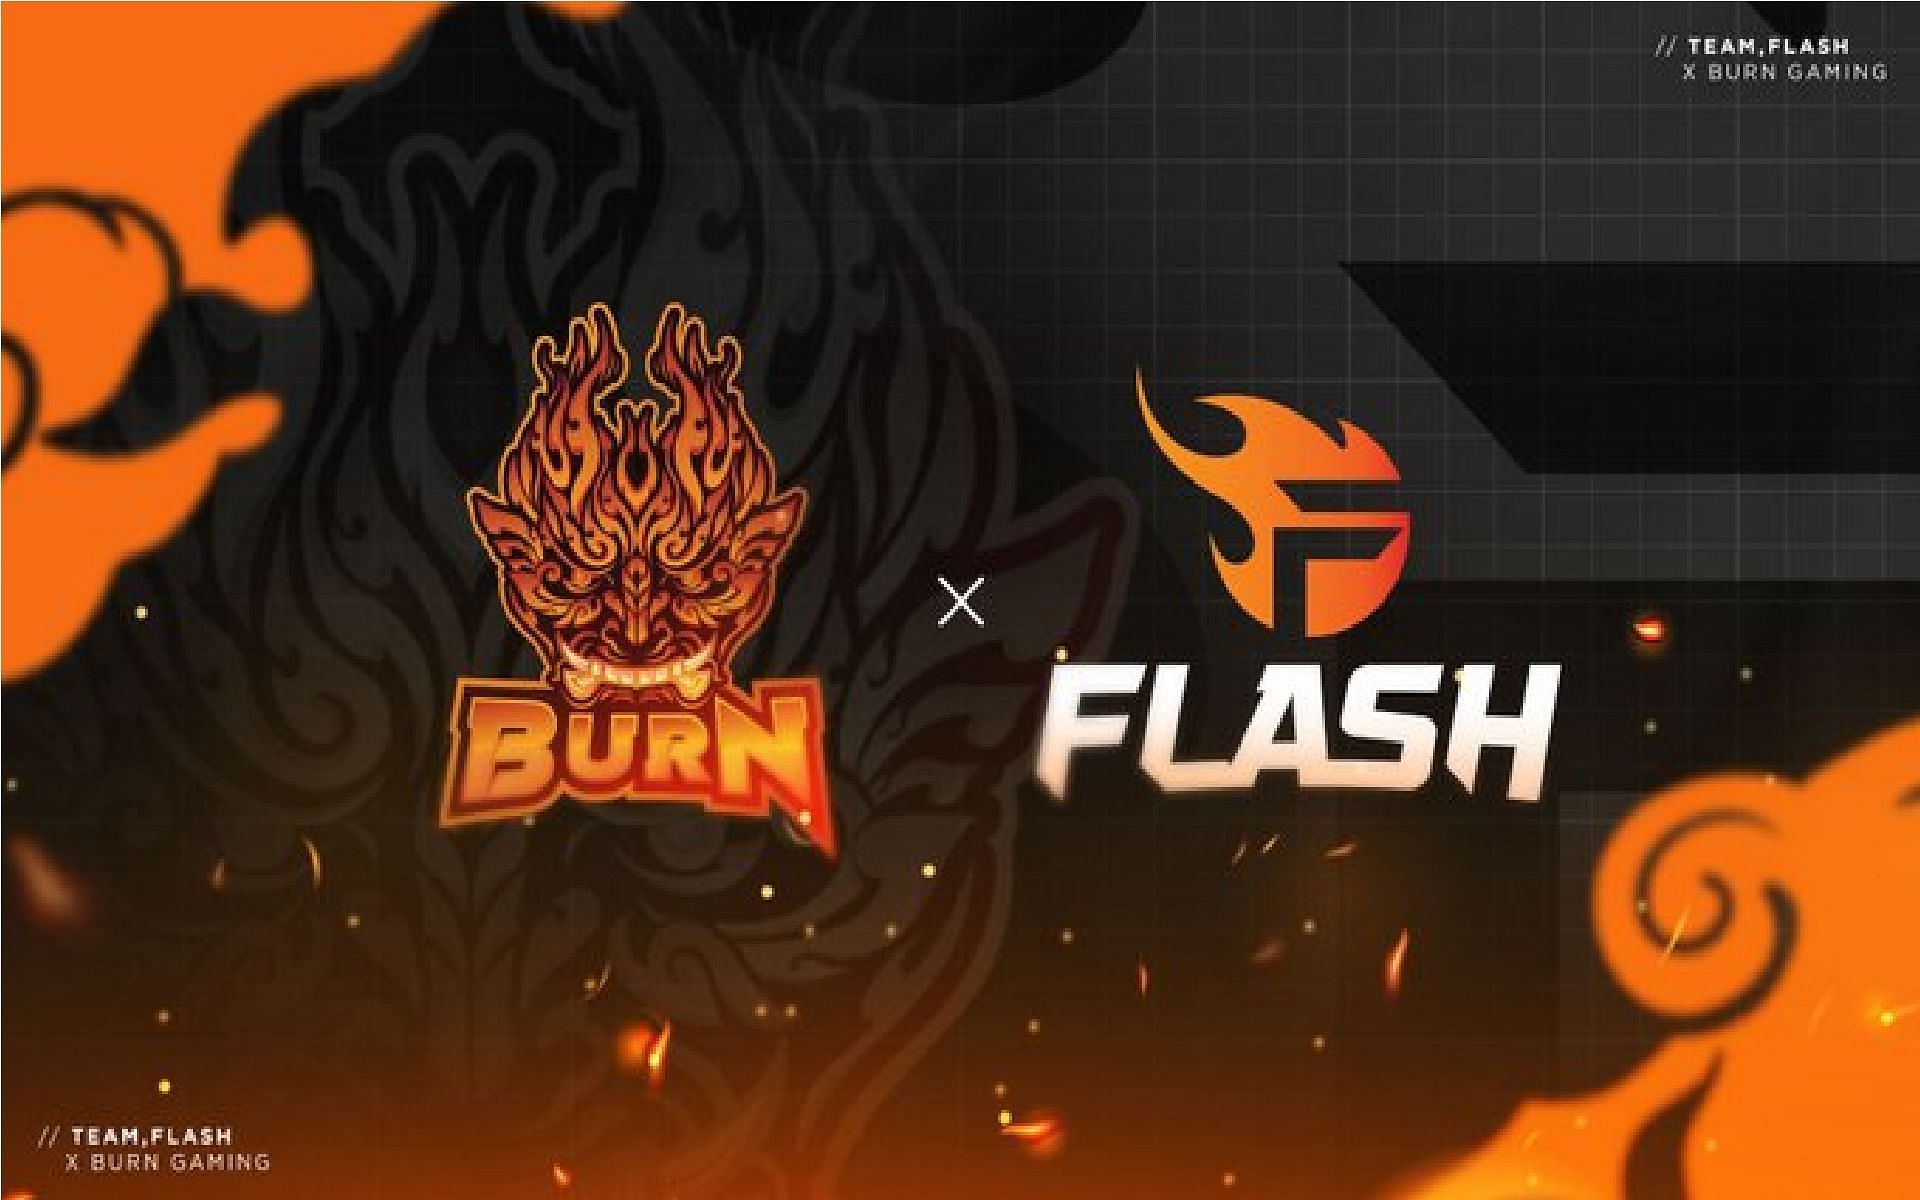 Team flash announced the creation of Burn x Flash (Image via X/Team Flash)